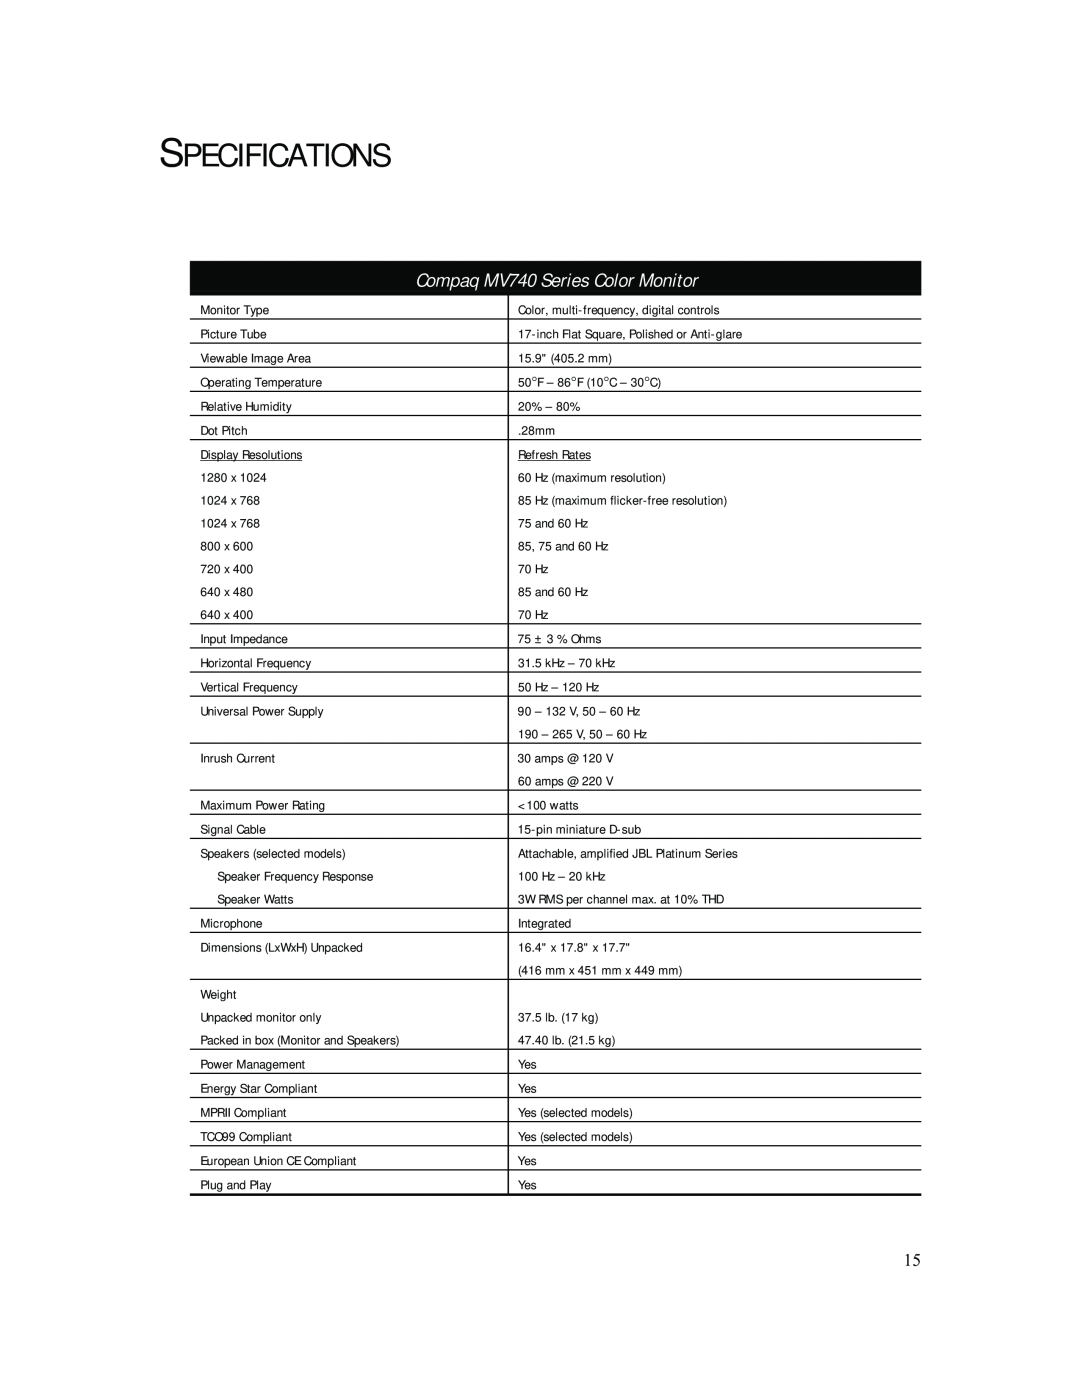 Compaq manual Specifications, Compaq MV740 Series Color Monitor 